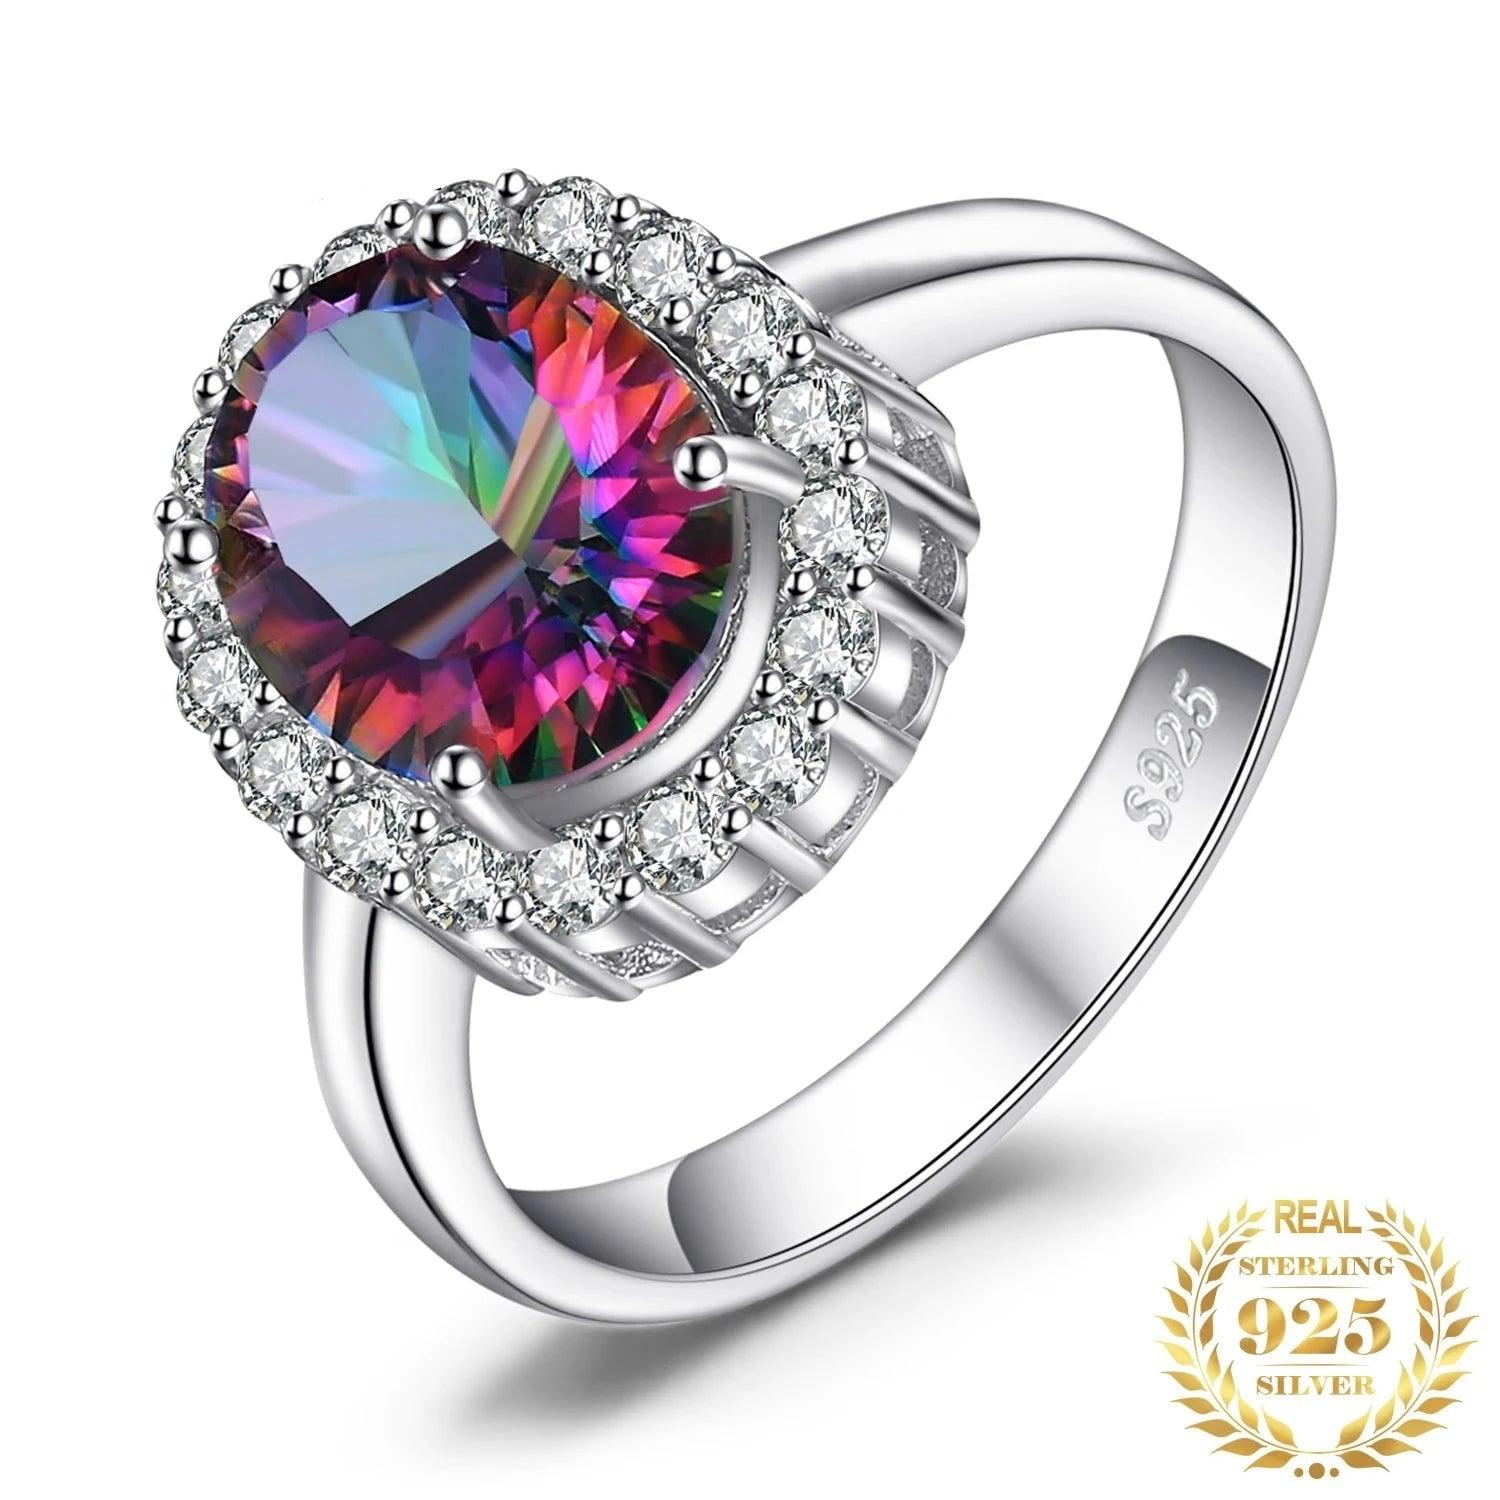 JPARCJ531 Finger Ring Charm Jewelry - Mystic Rainbow Quartz 925 Sterling Silver - Touchy Style